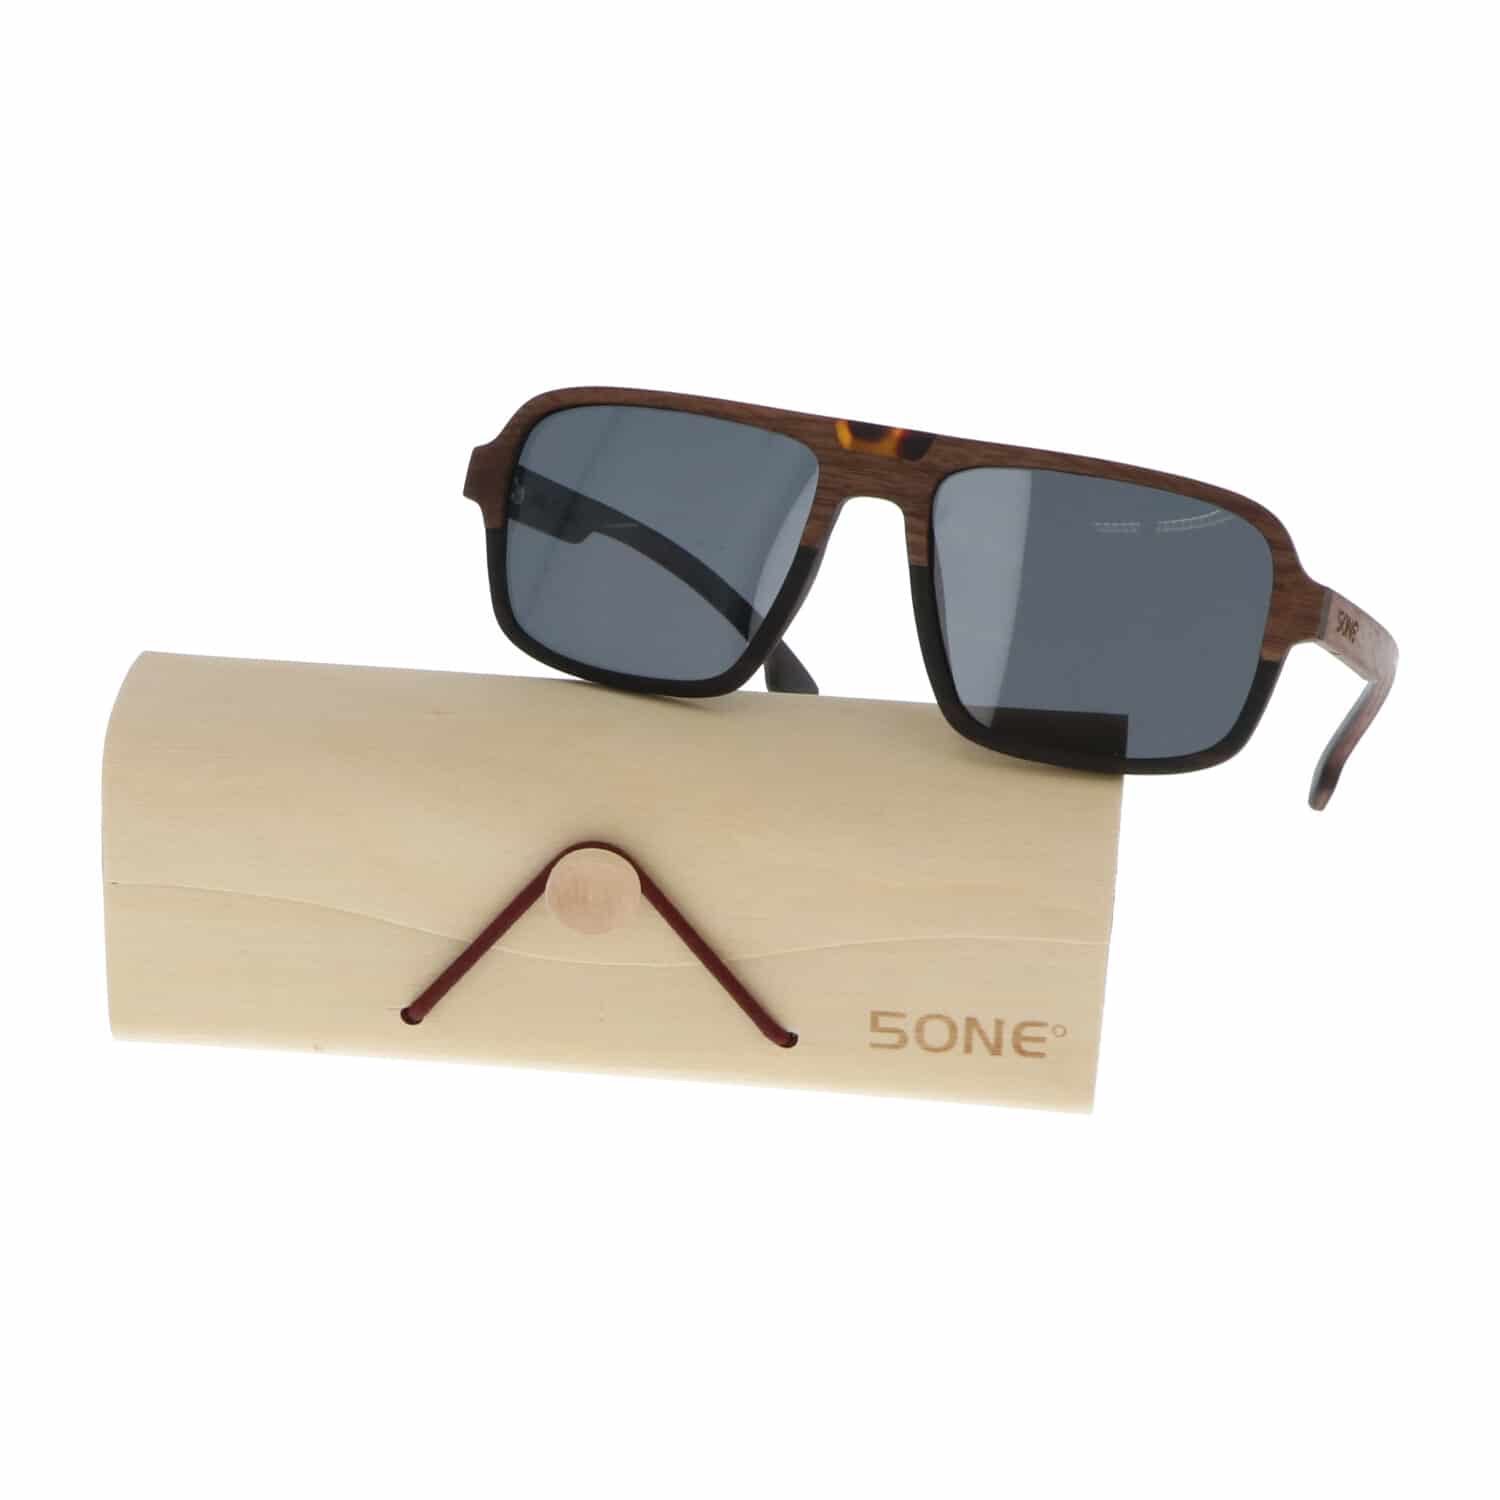 5one® Aviator Walnut Square - walnoot houten zonnebril - grijze lens